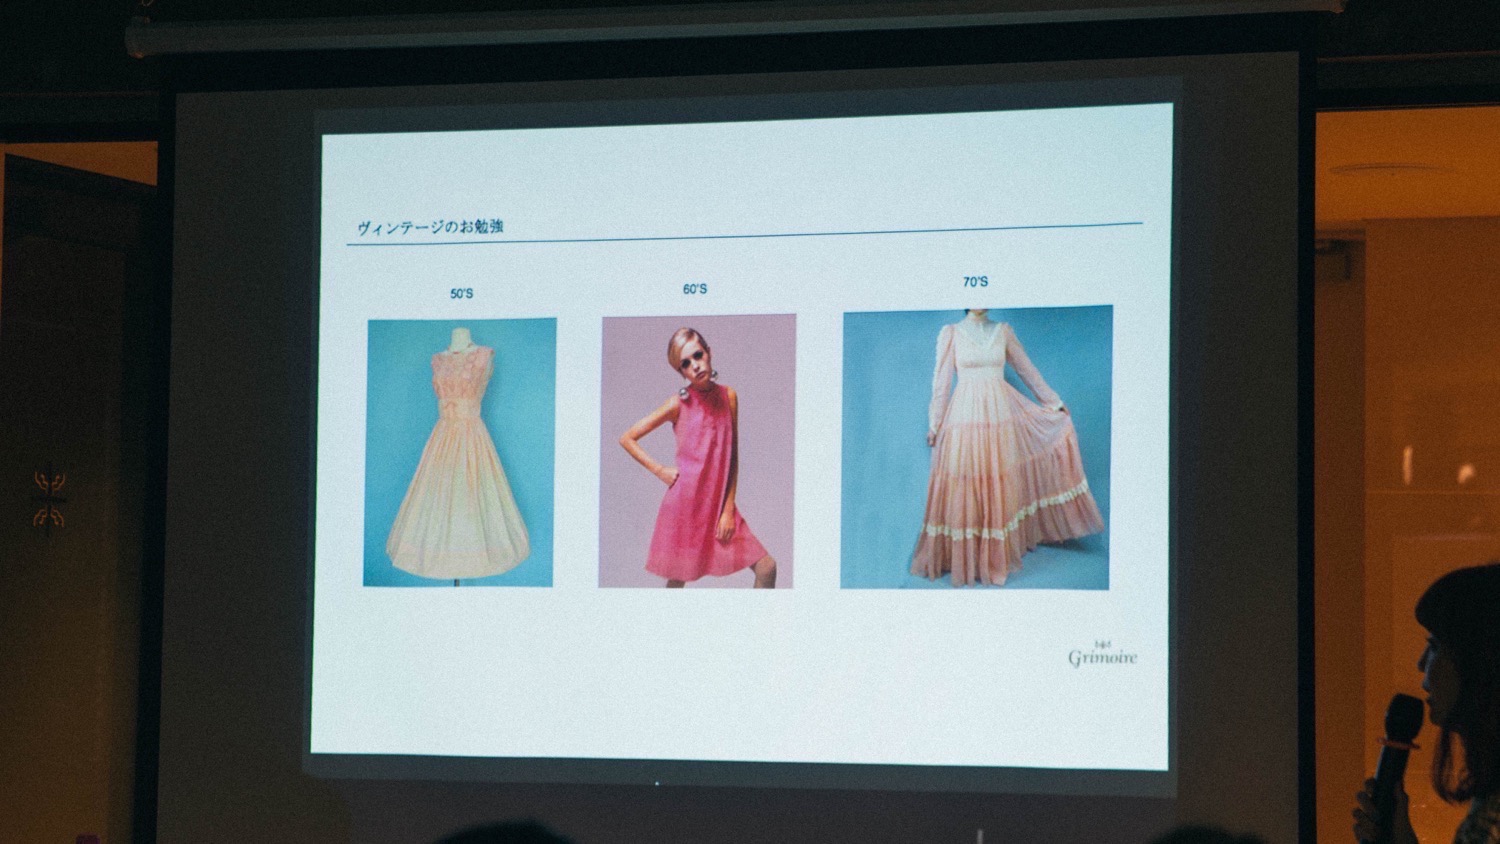 Tokyo fashion technology lab 76